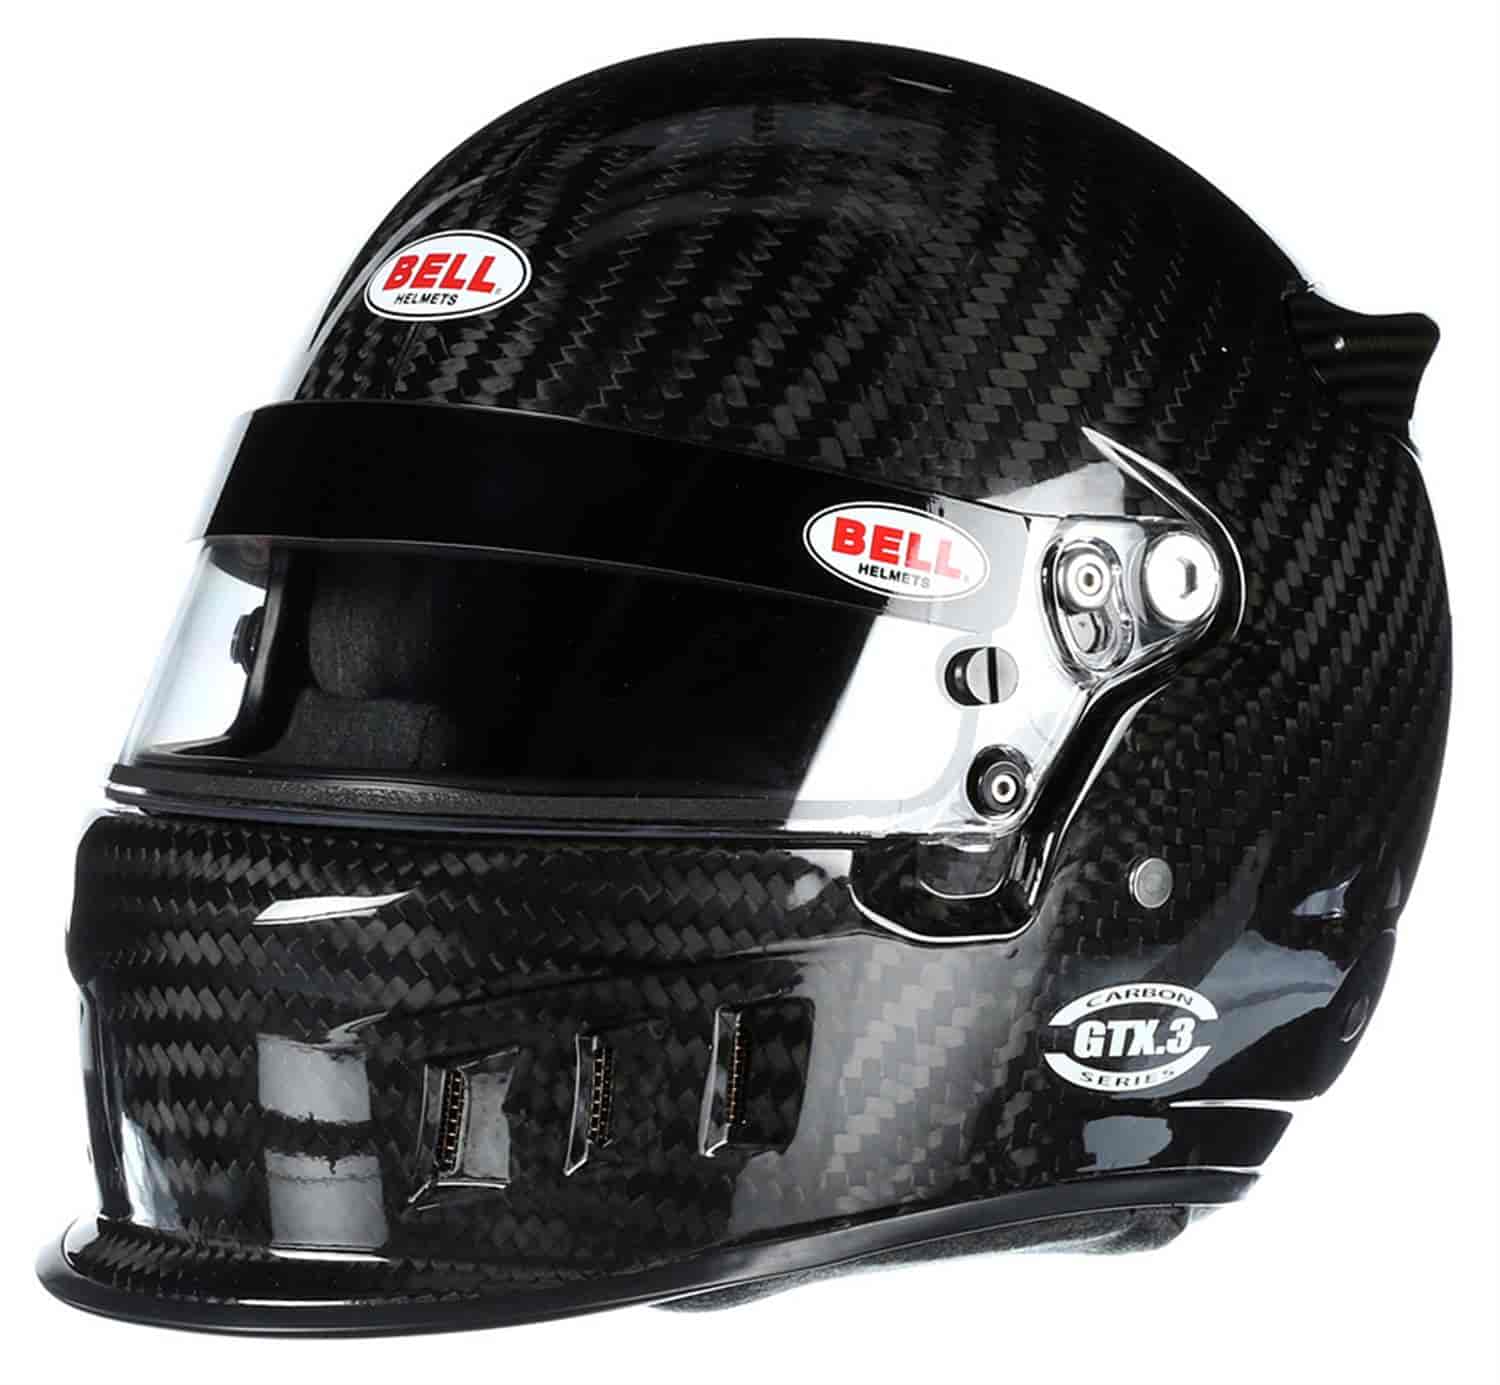 Bell GTX3 Carbon Racing Helmets SA2020